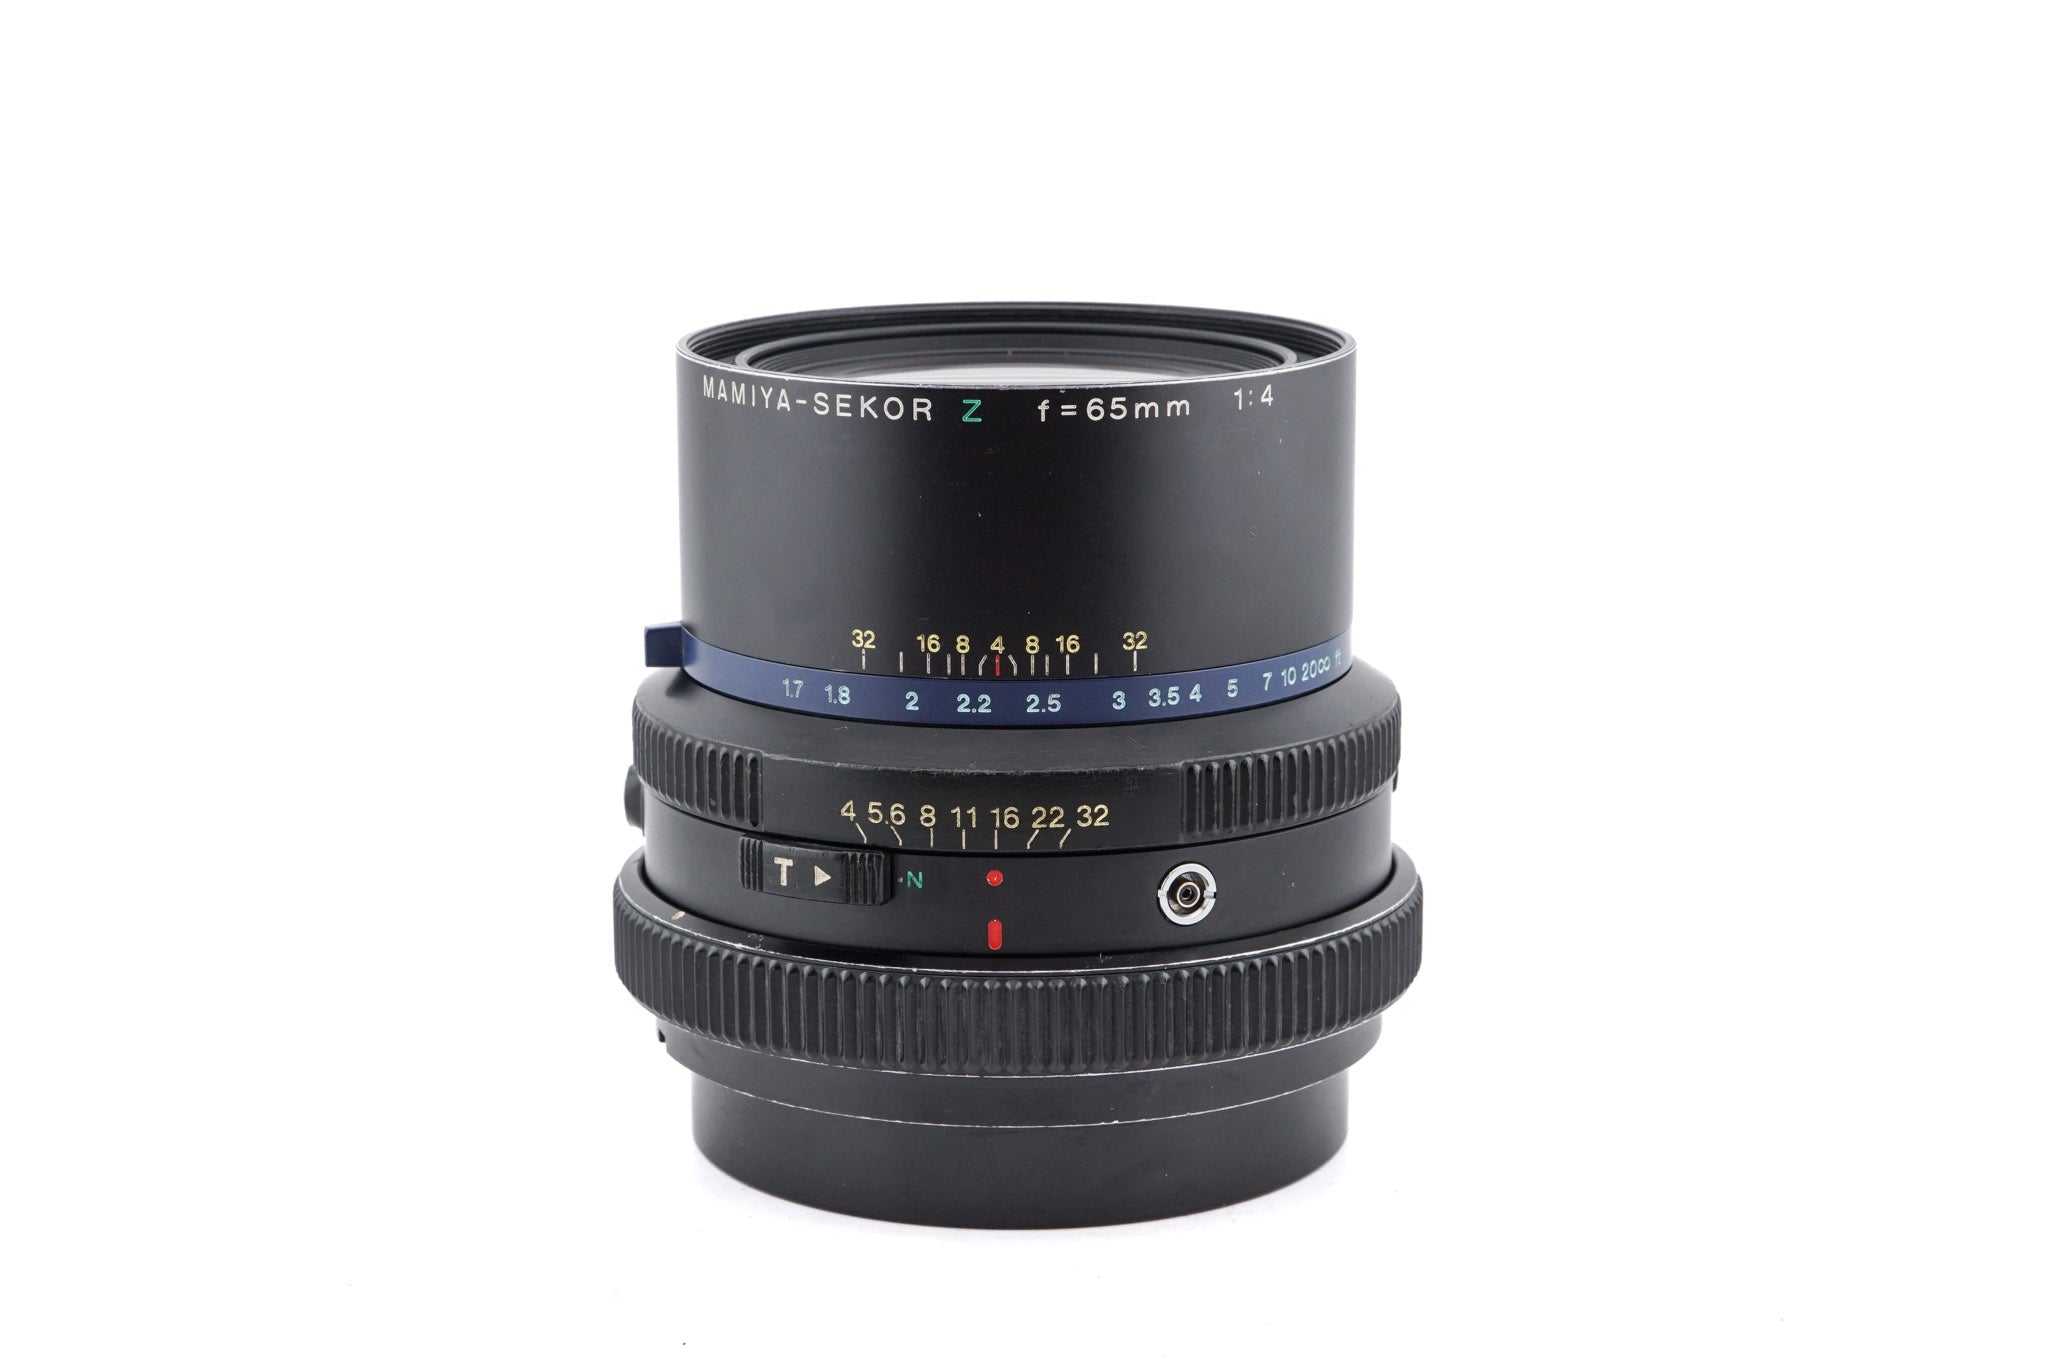 Mamiya 110mm f2.8 Sekor Z W - Lens – Kamerastore